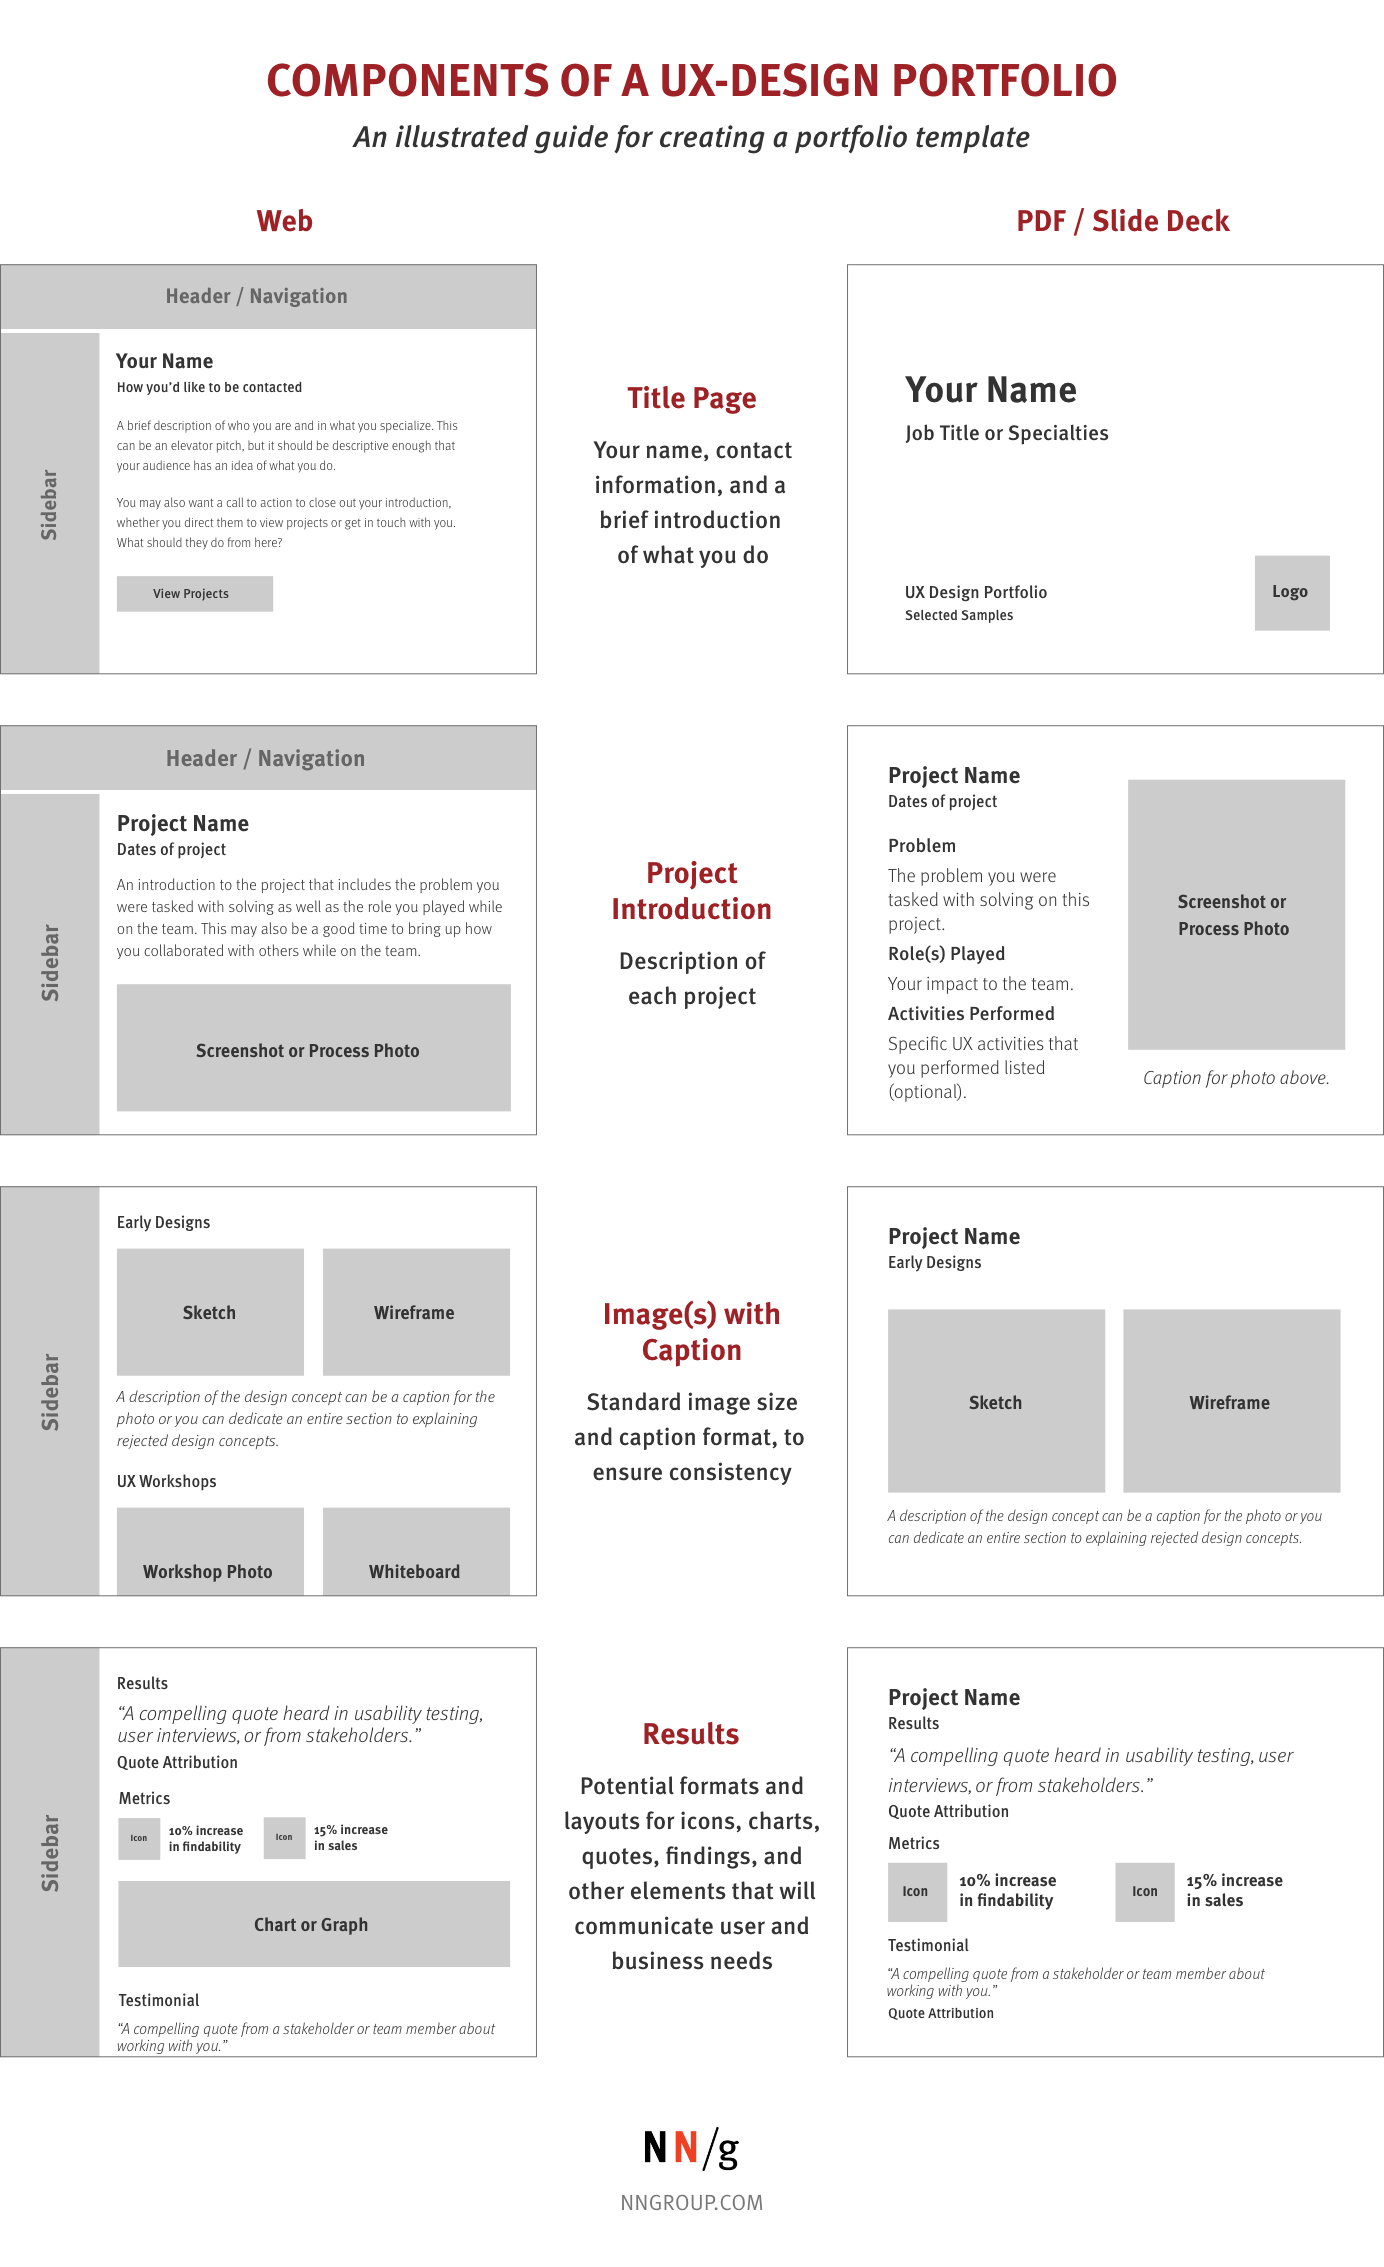 5 Steps To Creating A Ux Design Portfolio Regarding Ux Report Template